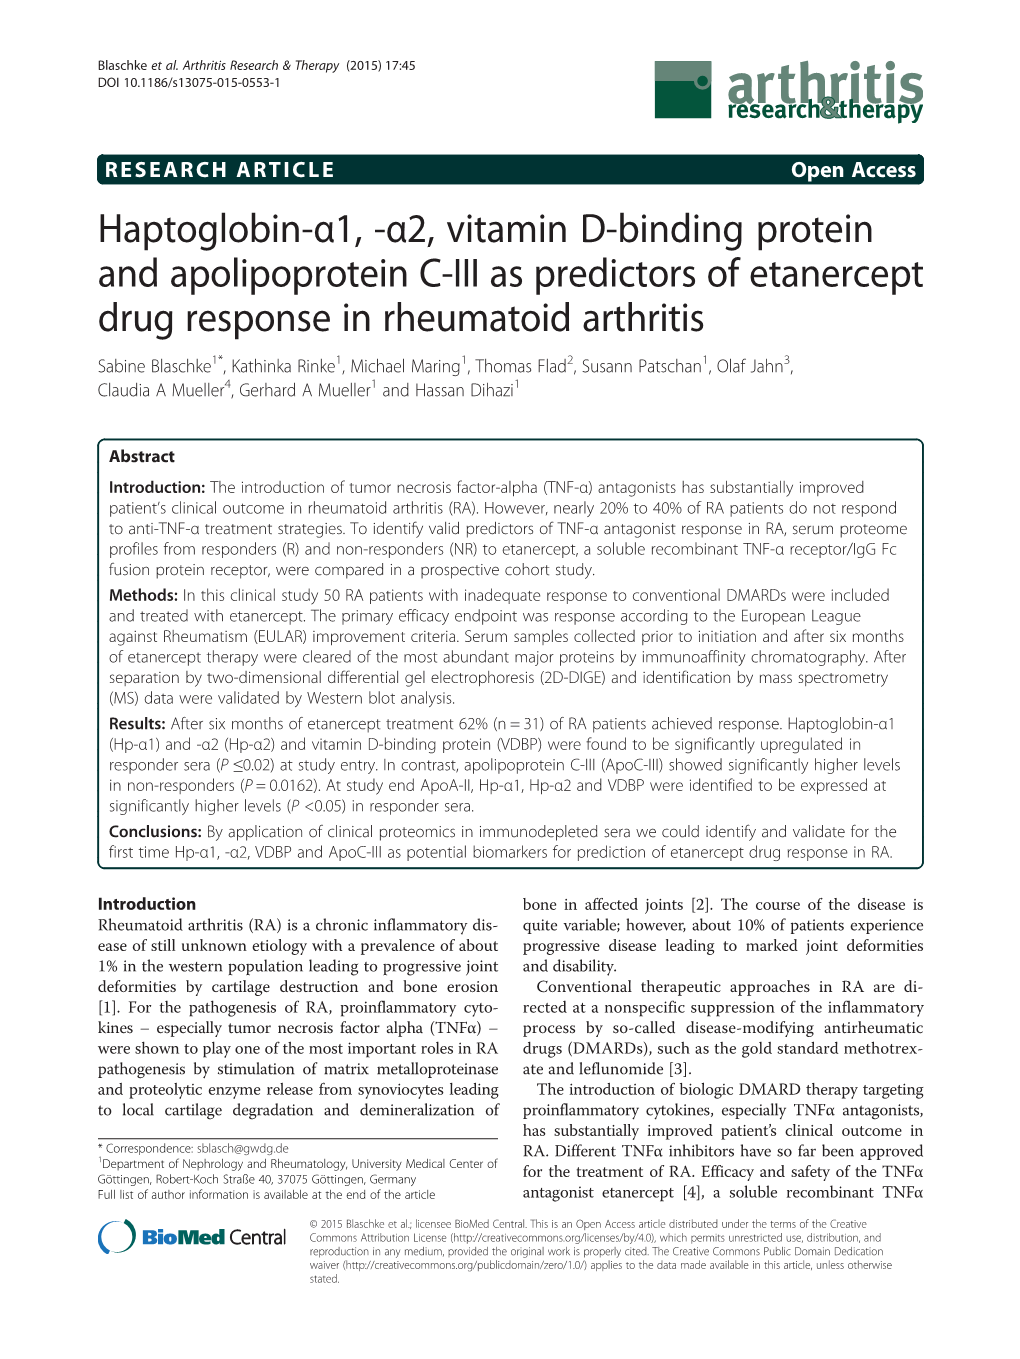 Haptoglobin-A1, -A2, Vitamin D-Binding Protein And